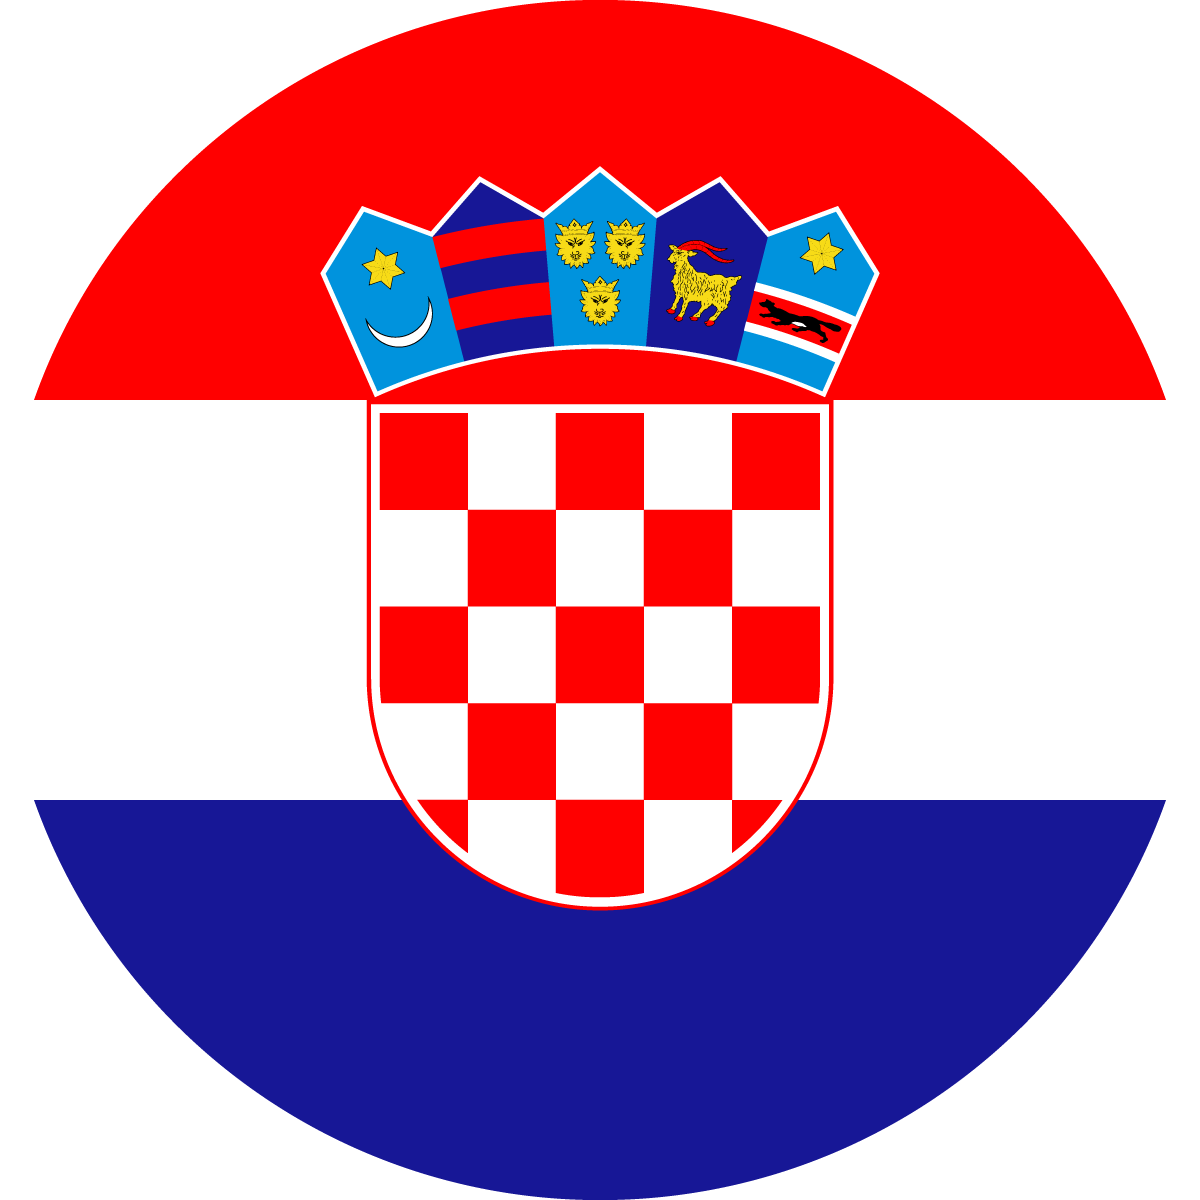 Copy of Copy of Copy of Copy of Copy of Copy of Croatia